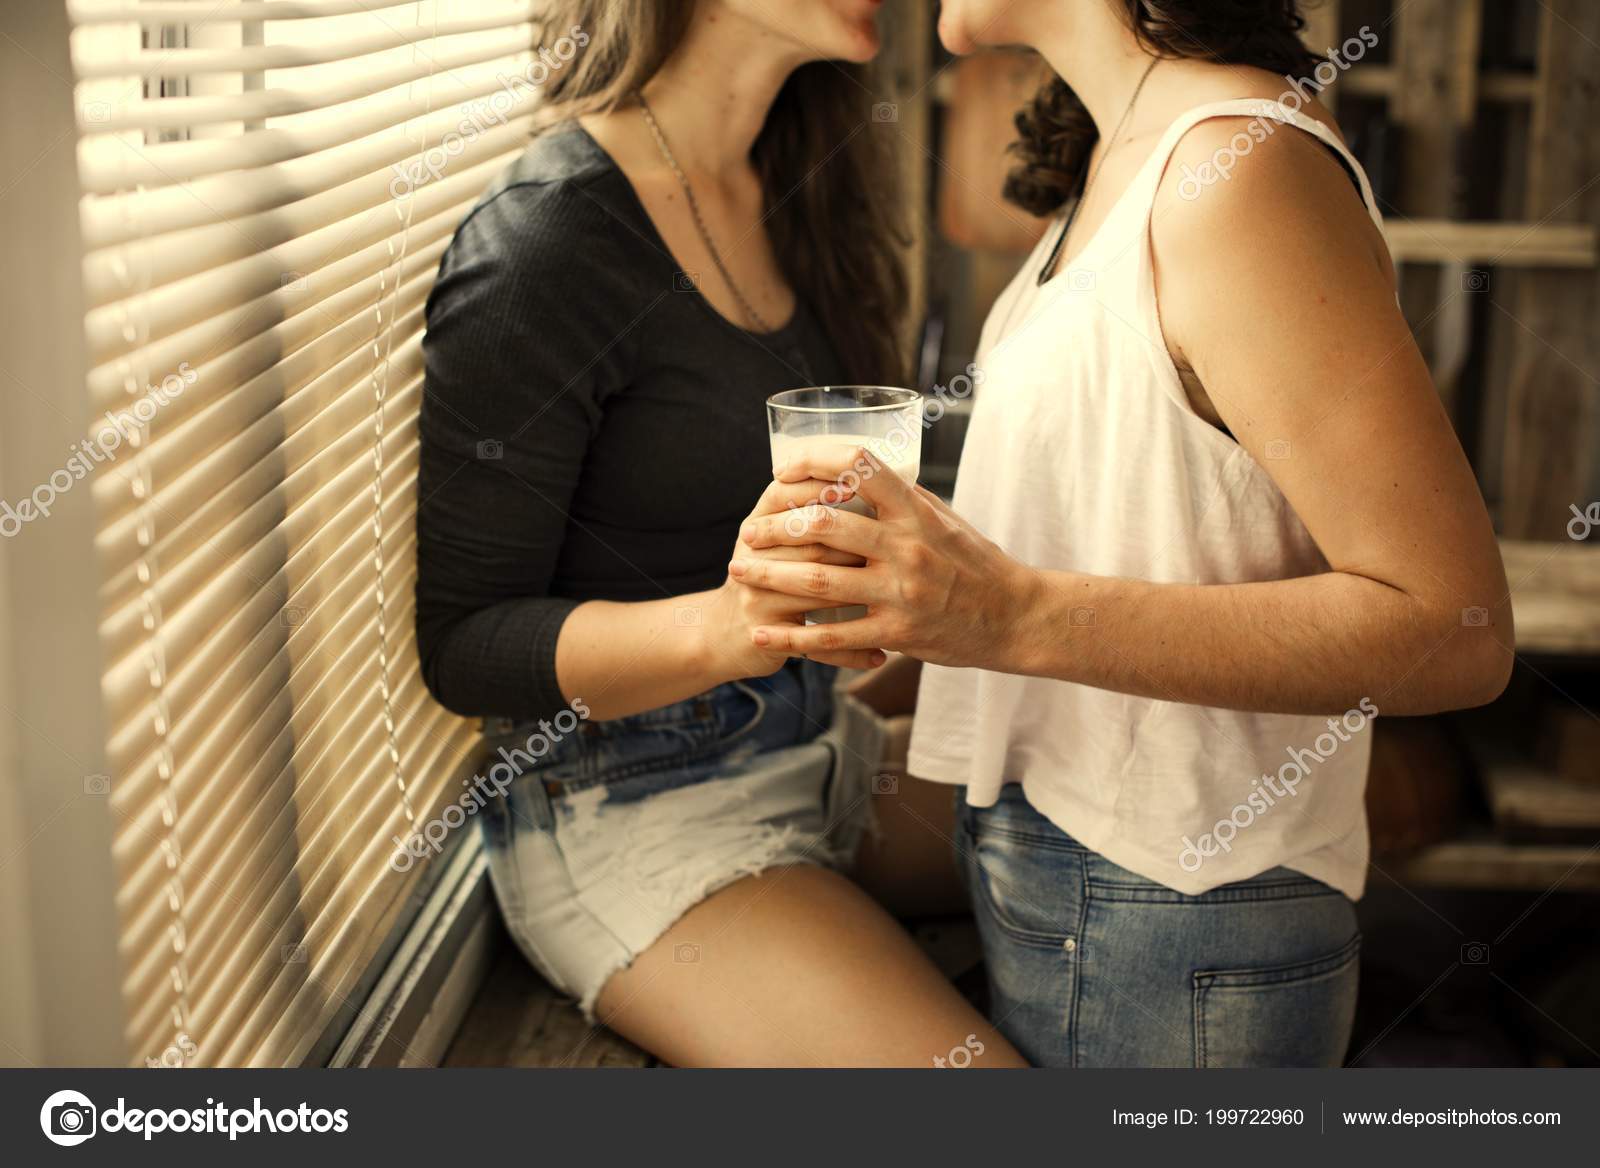 Lesbian Love Pics Telegraph